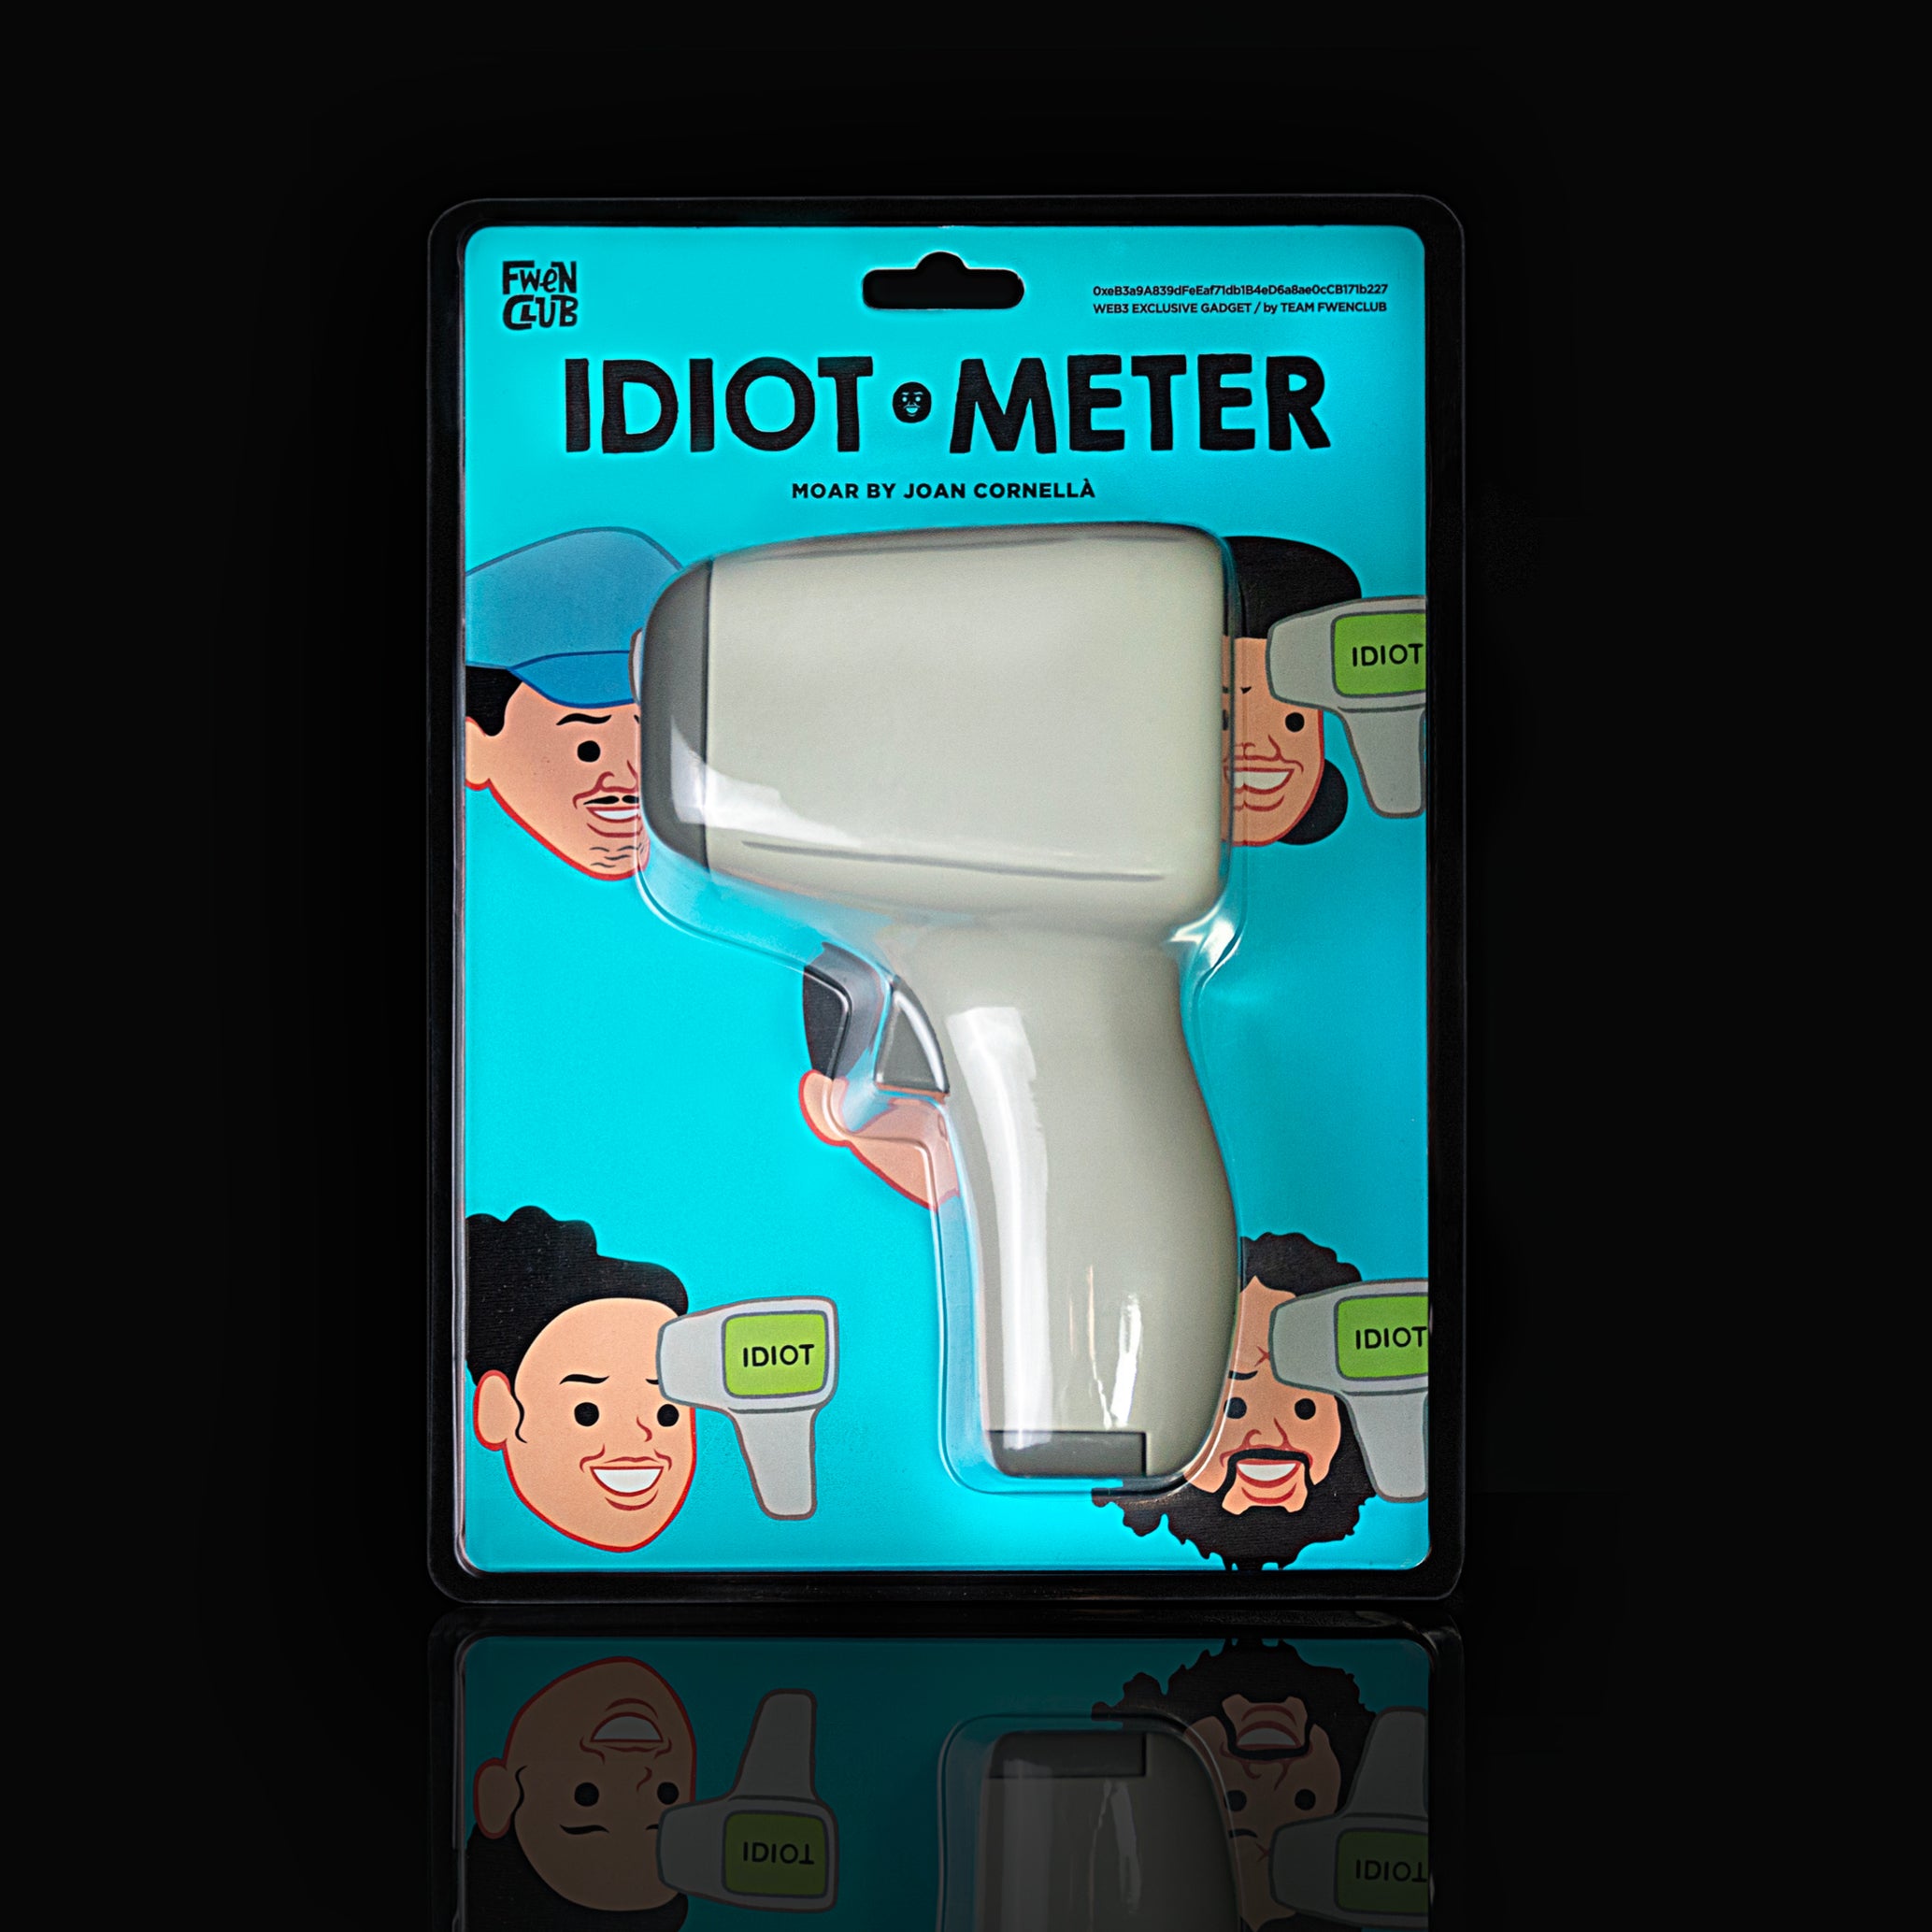 Idiotmeter – FWENCLUB